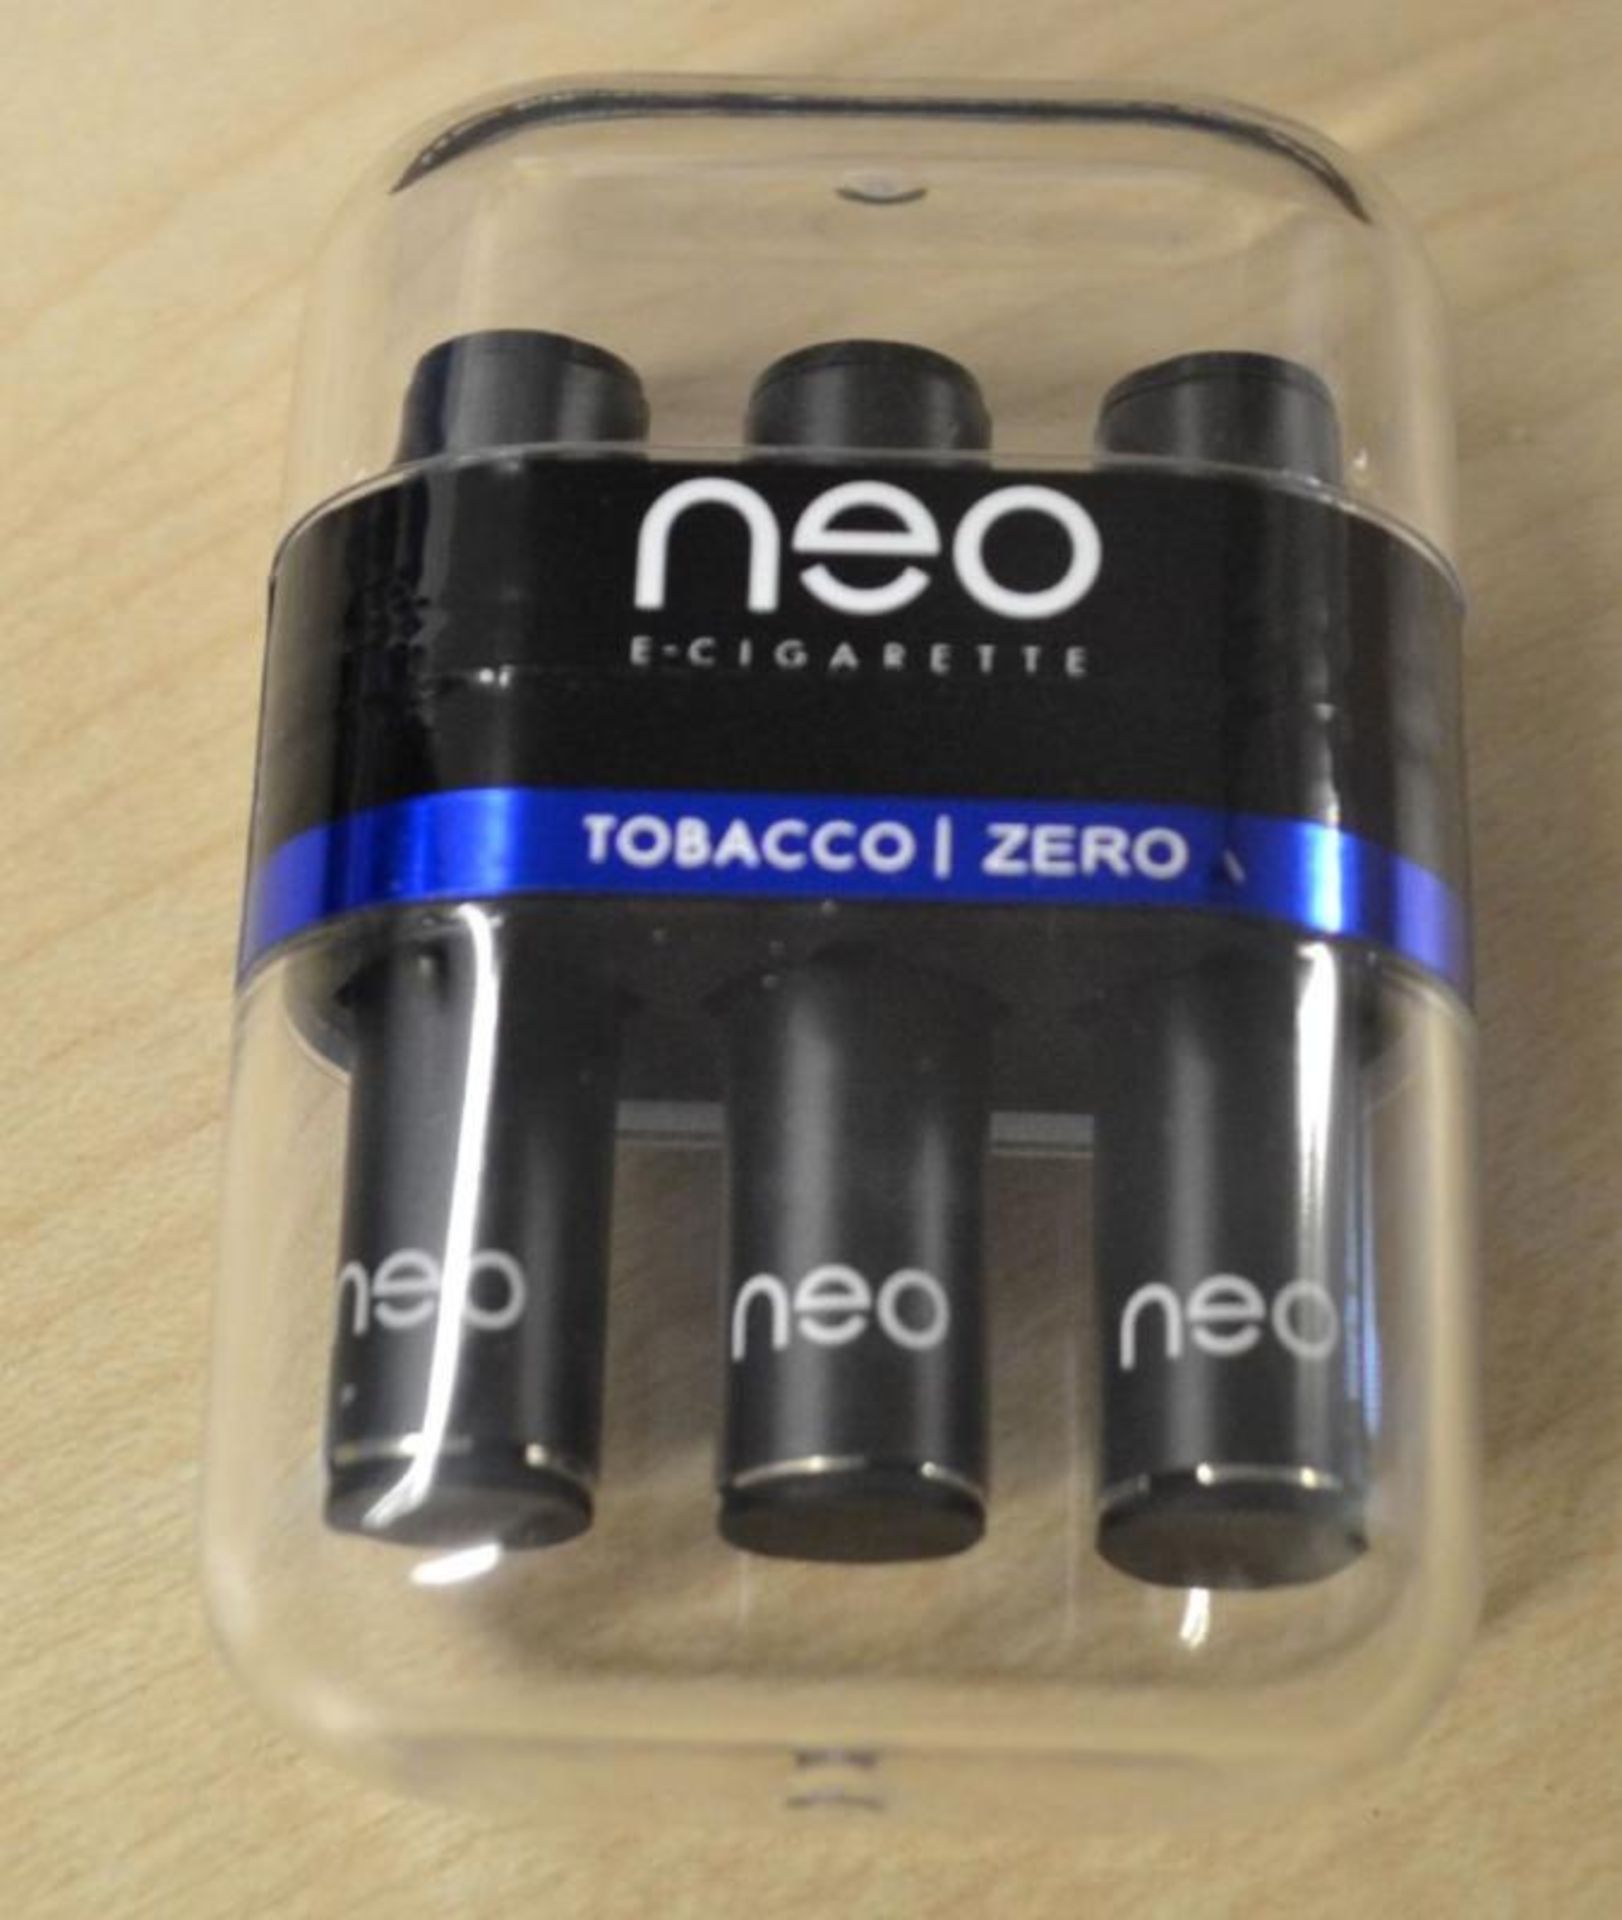 30 x Neo E-Cigarettes Neo Infinity Tobacco Zero Refill Packs - New & Sealed Stock - CL185 - Ref: DRT - Image 4 of 9